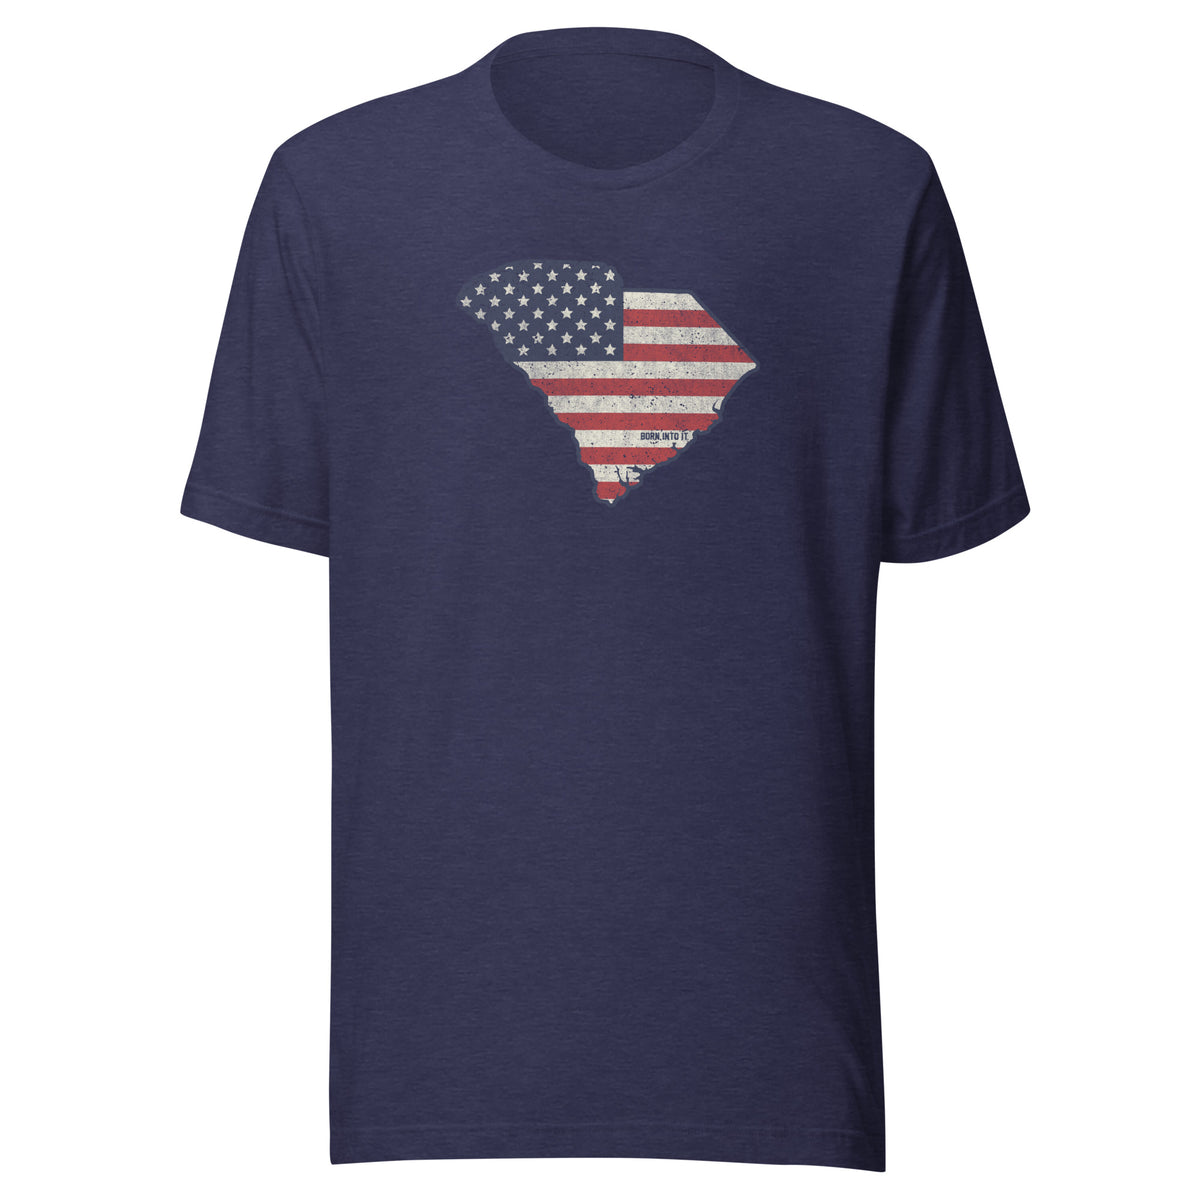 South Carolina Stars & Stripes Unisex t-shirt